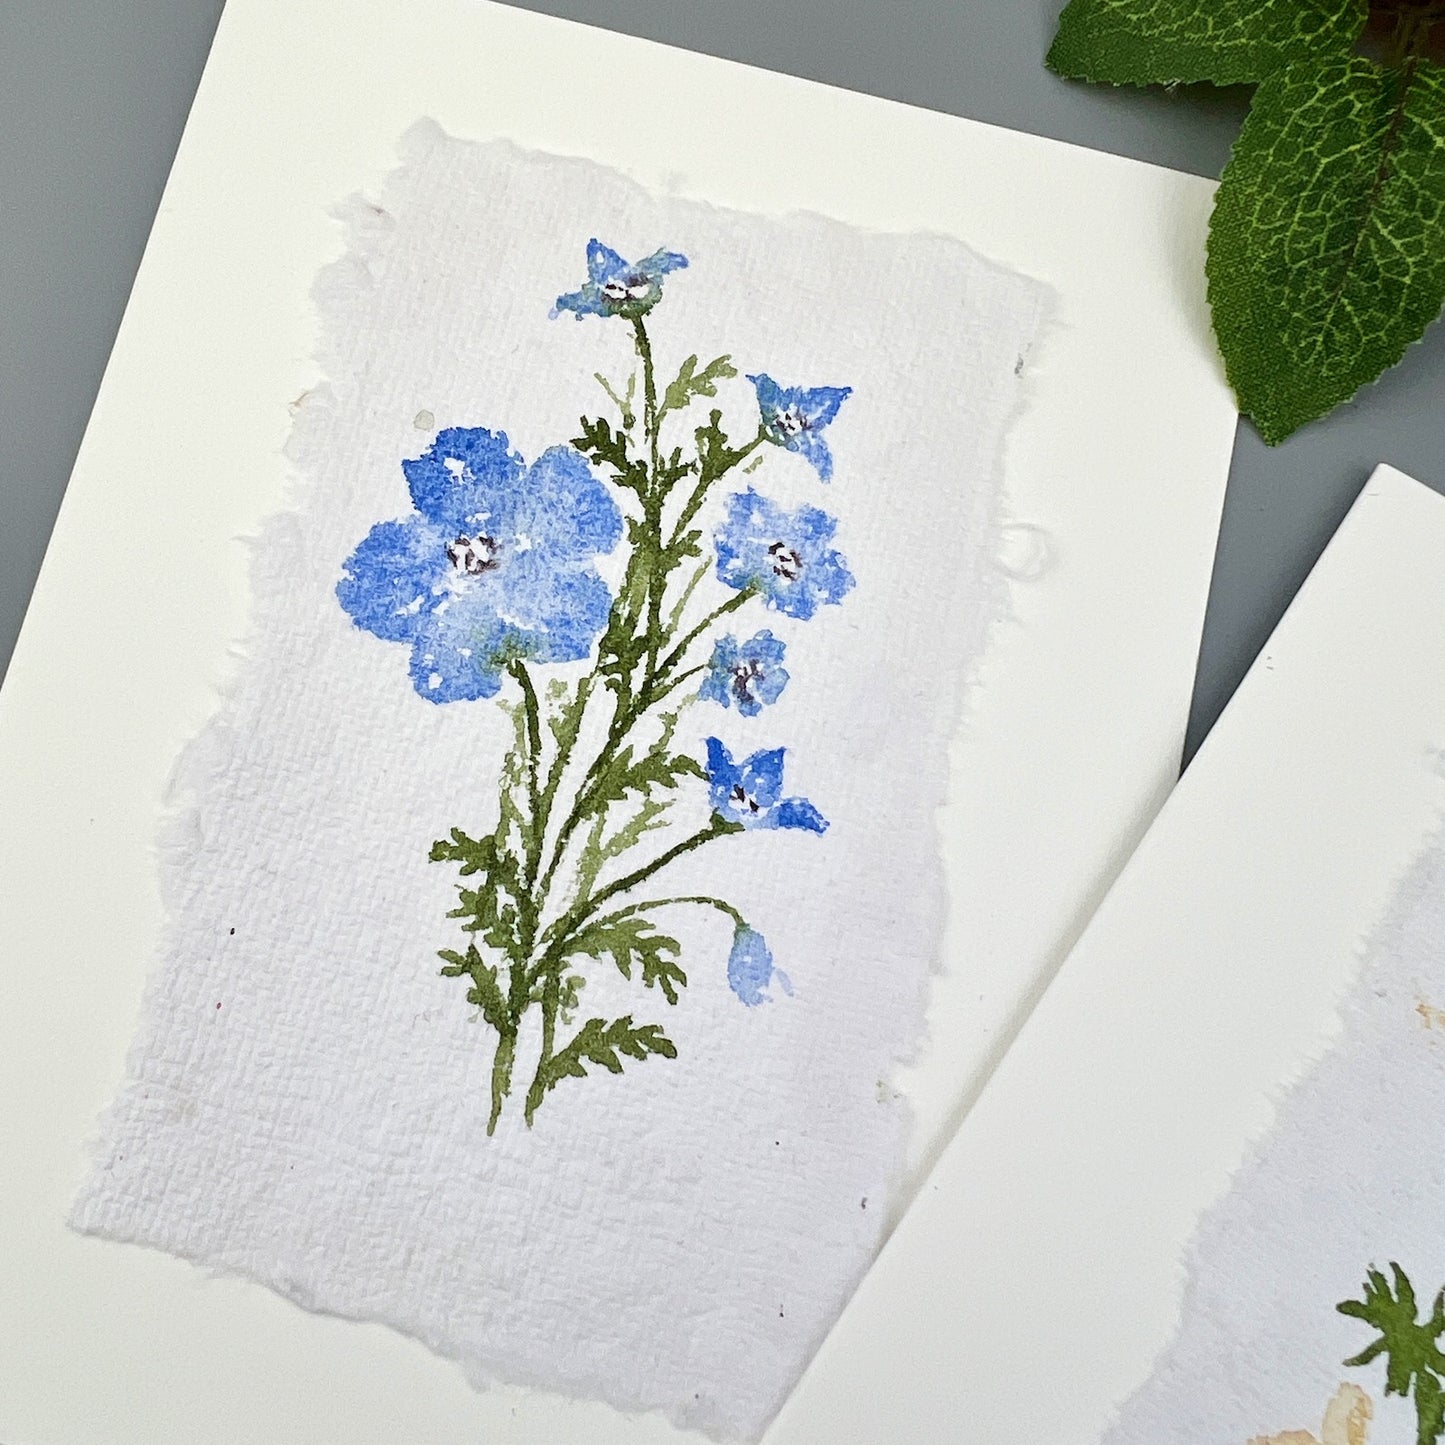 California Wildflowers - Hand-painted Greeting Cards - Original Watercolor Stationary